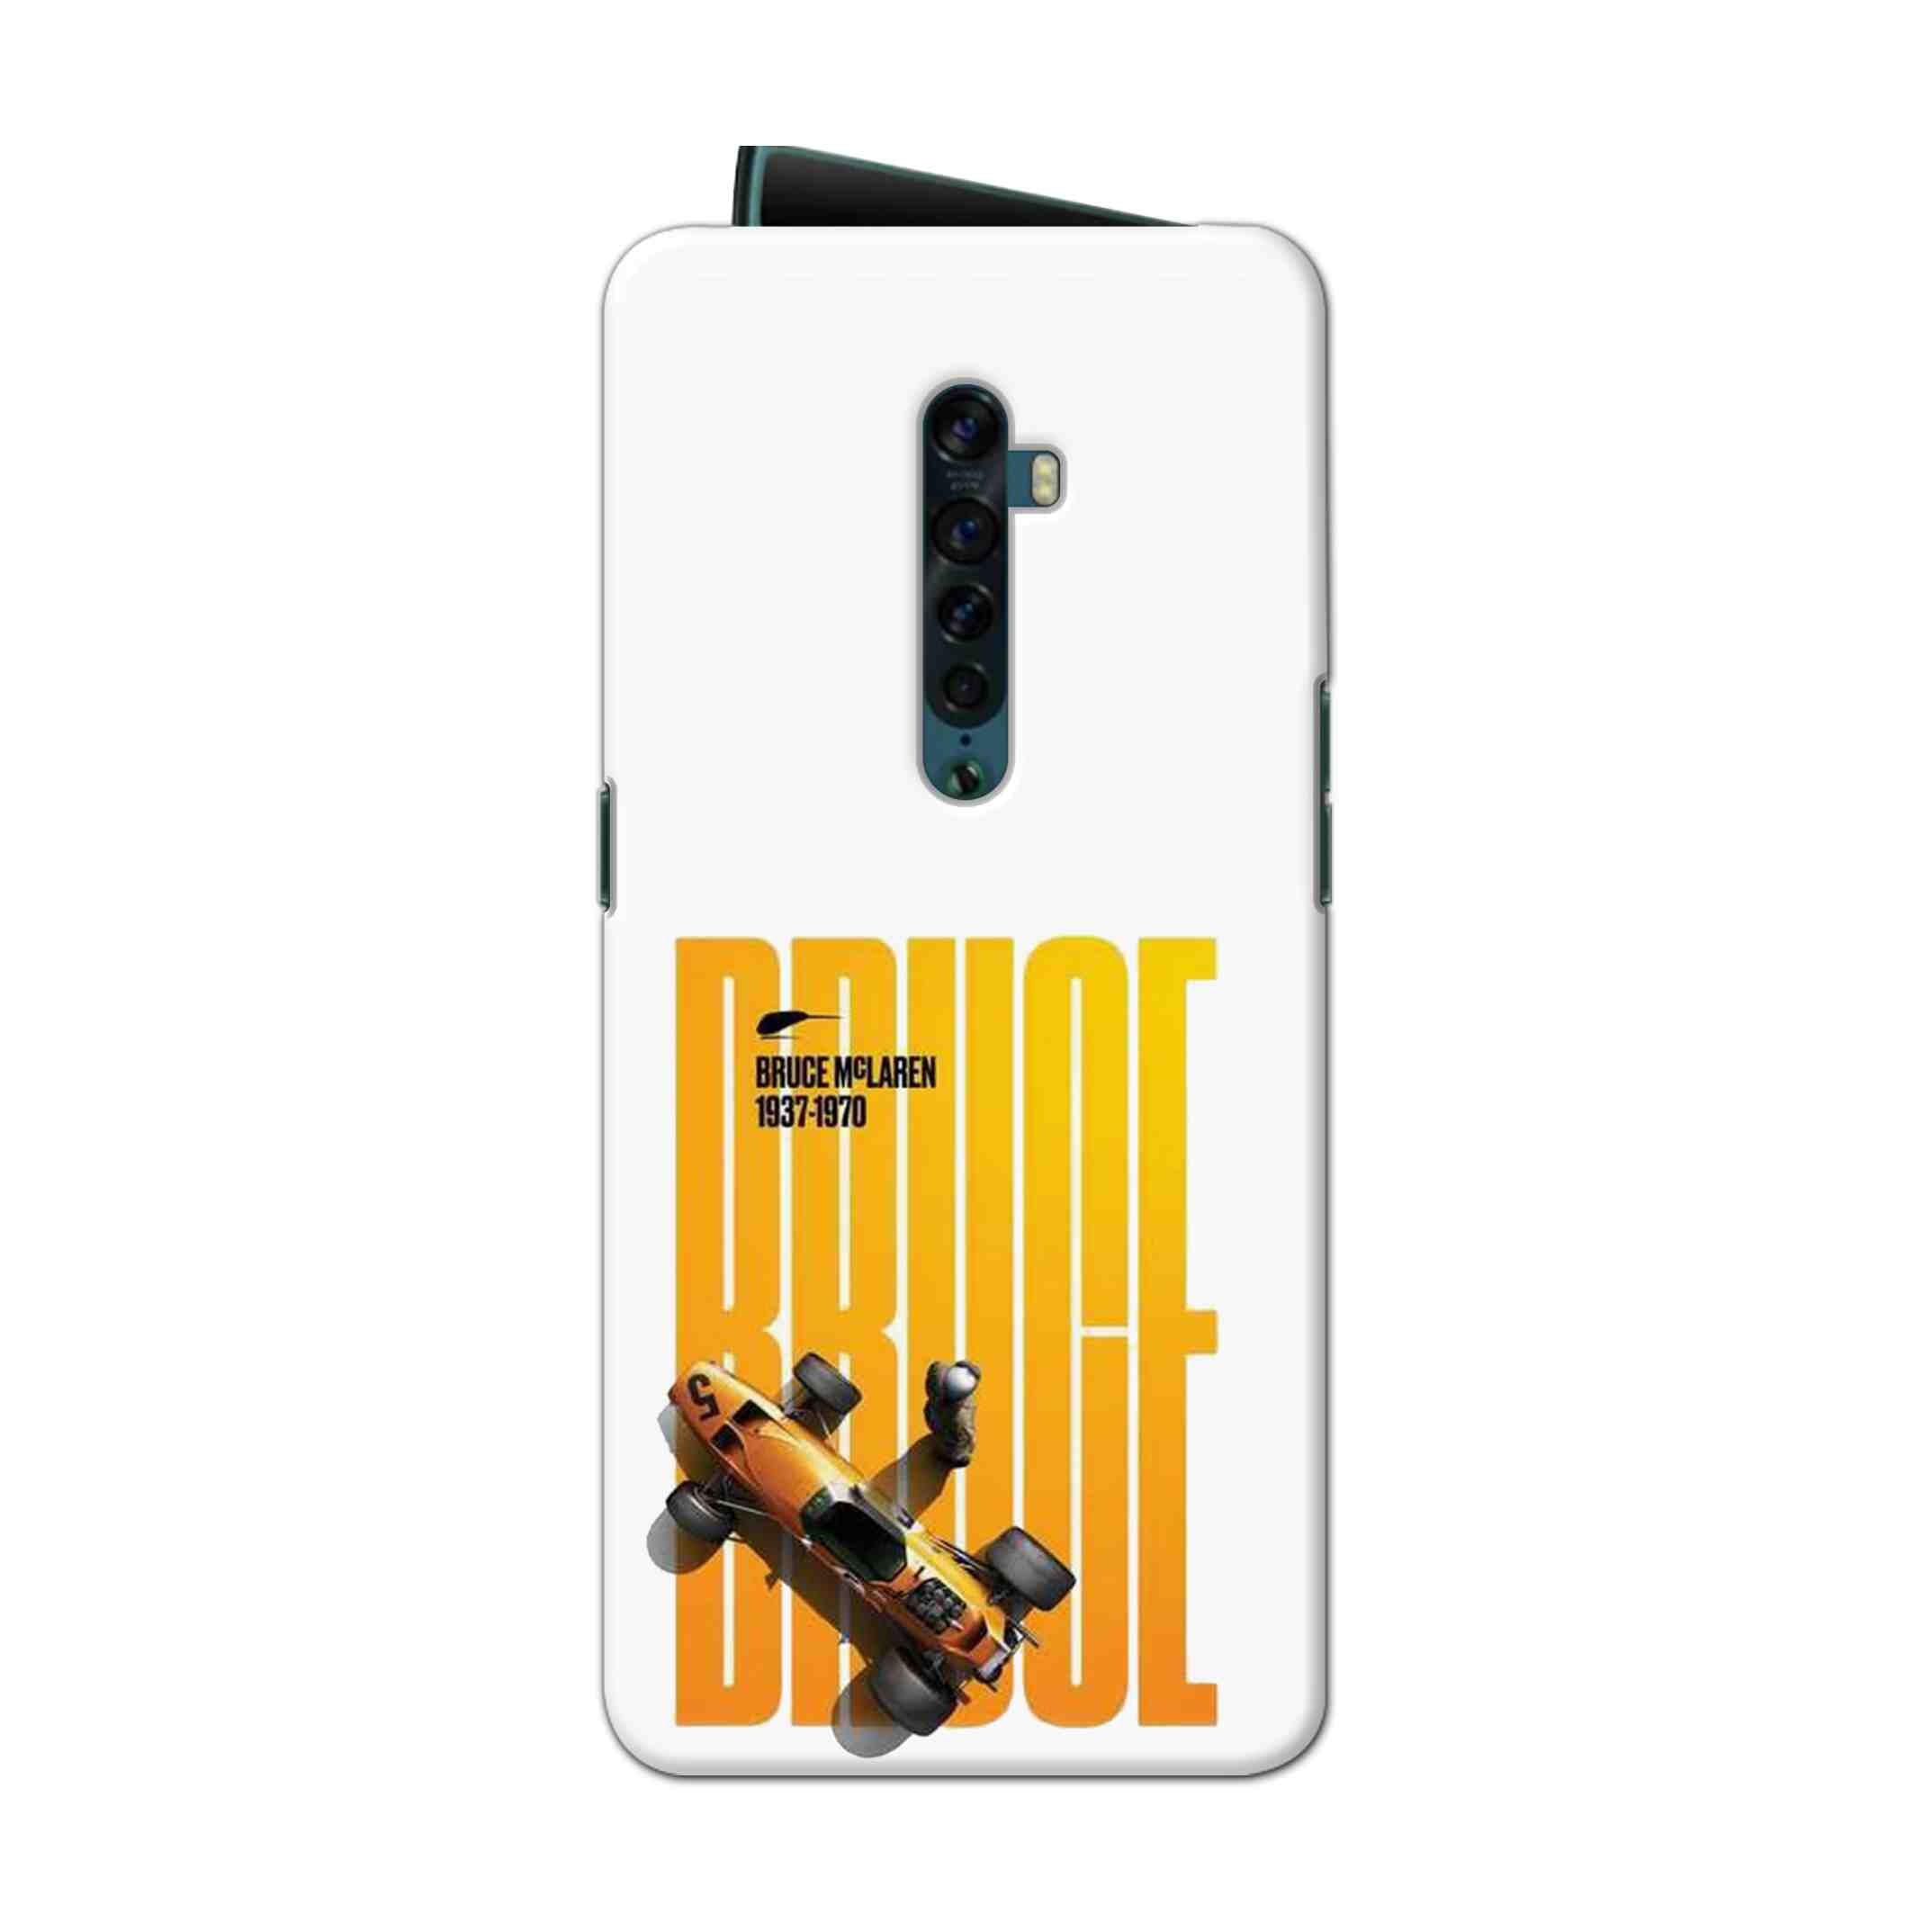 Buy Mc Laren Hard Back Mobile Phone Case Cover For Oppo Reno 2 Online